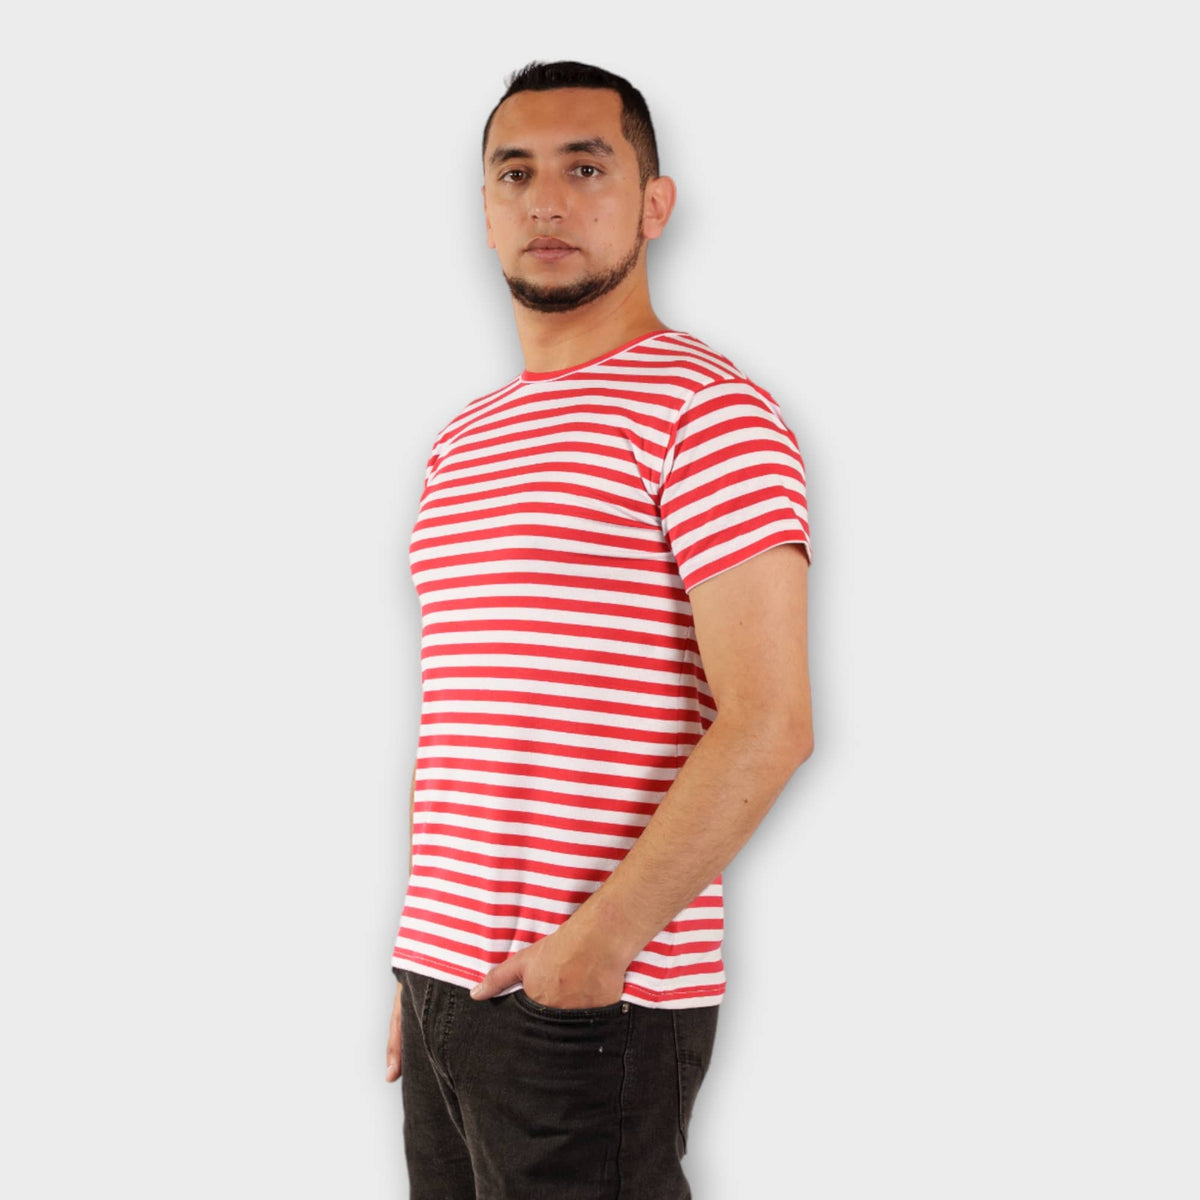 Camiseta rayas rojas y blancas